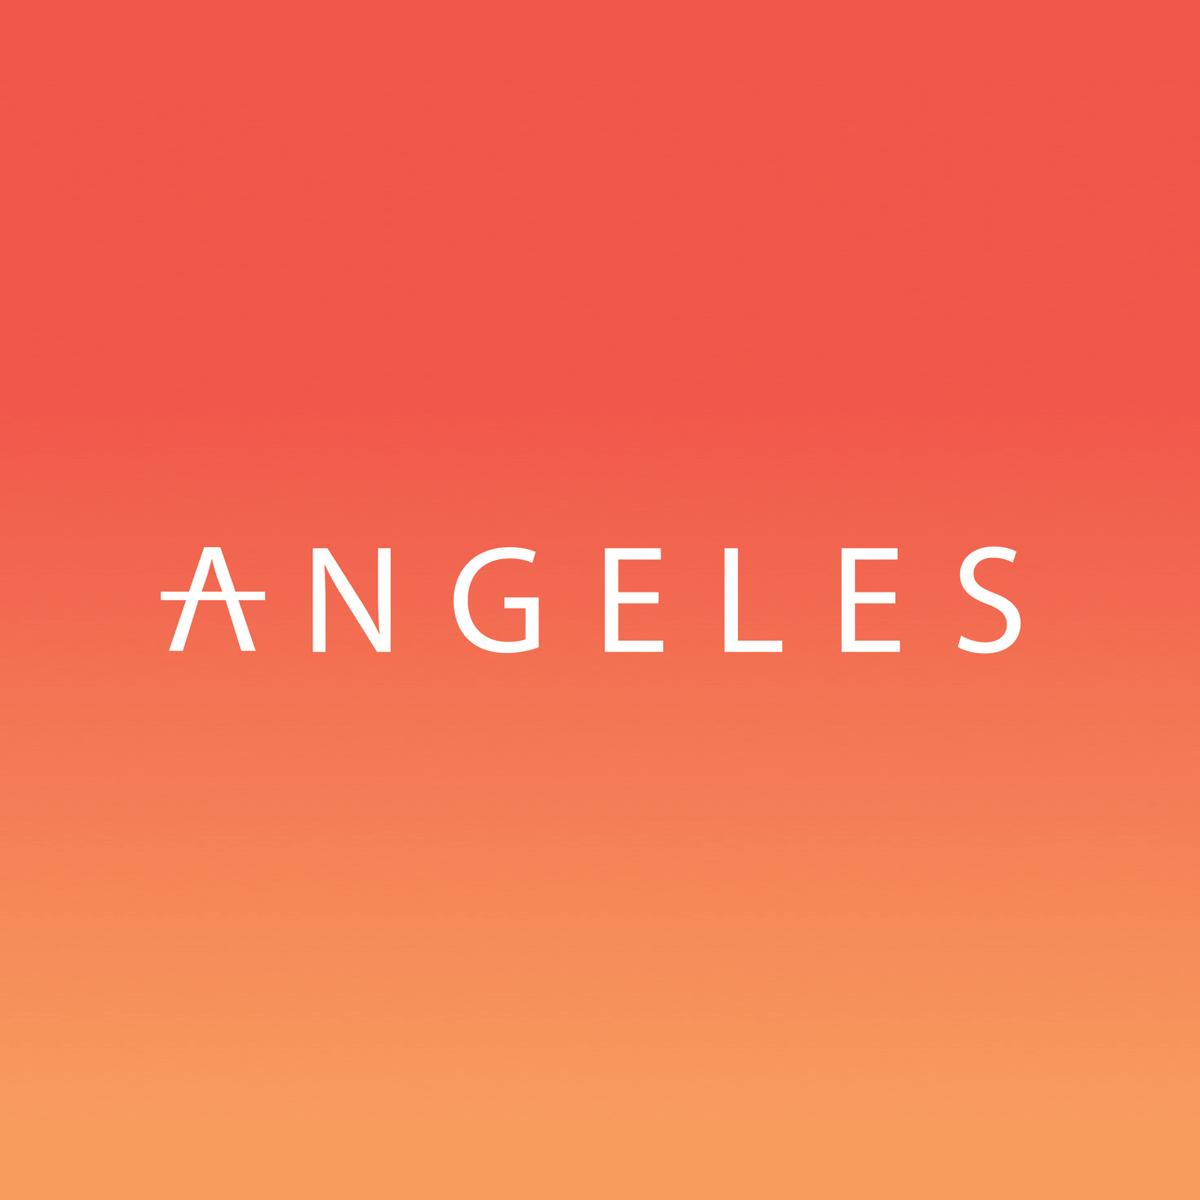 AngelesWellness's images